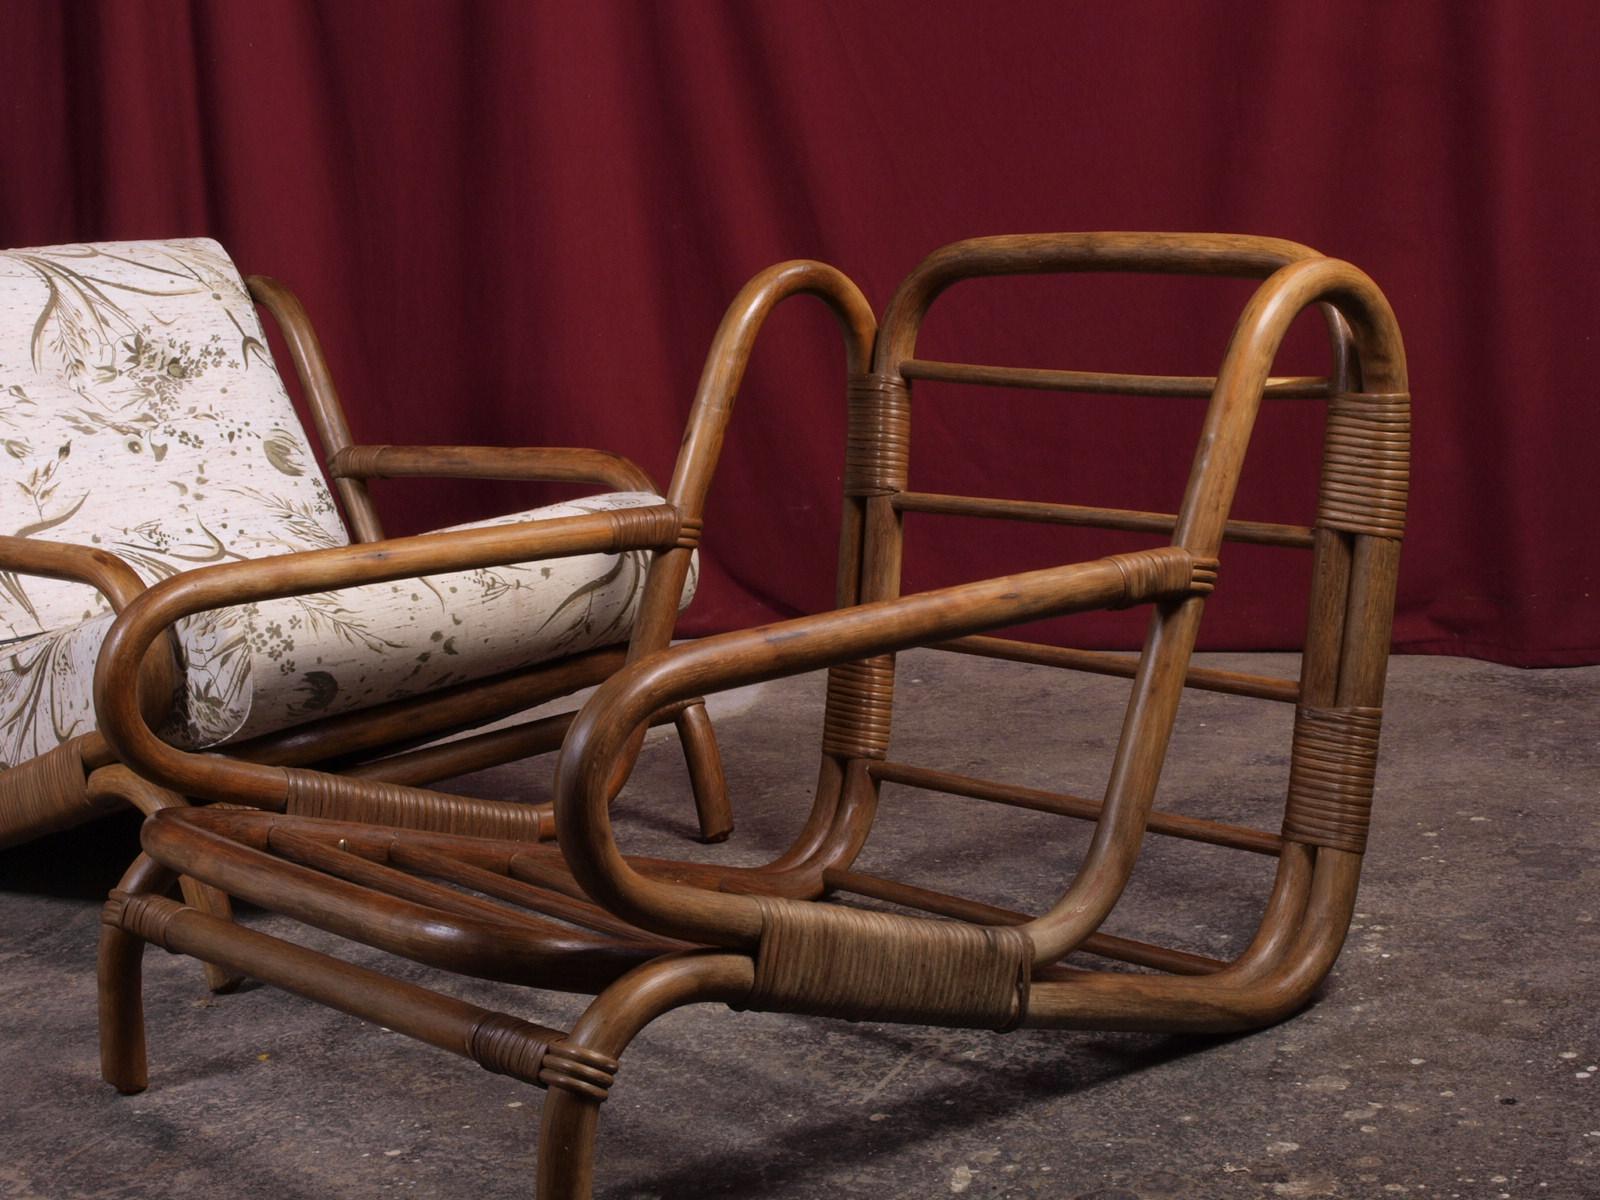 Bambou Rare Bamboo Vintage Danish Lounge Chairs, set of 2